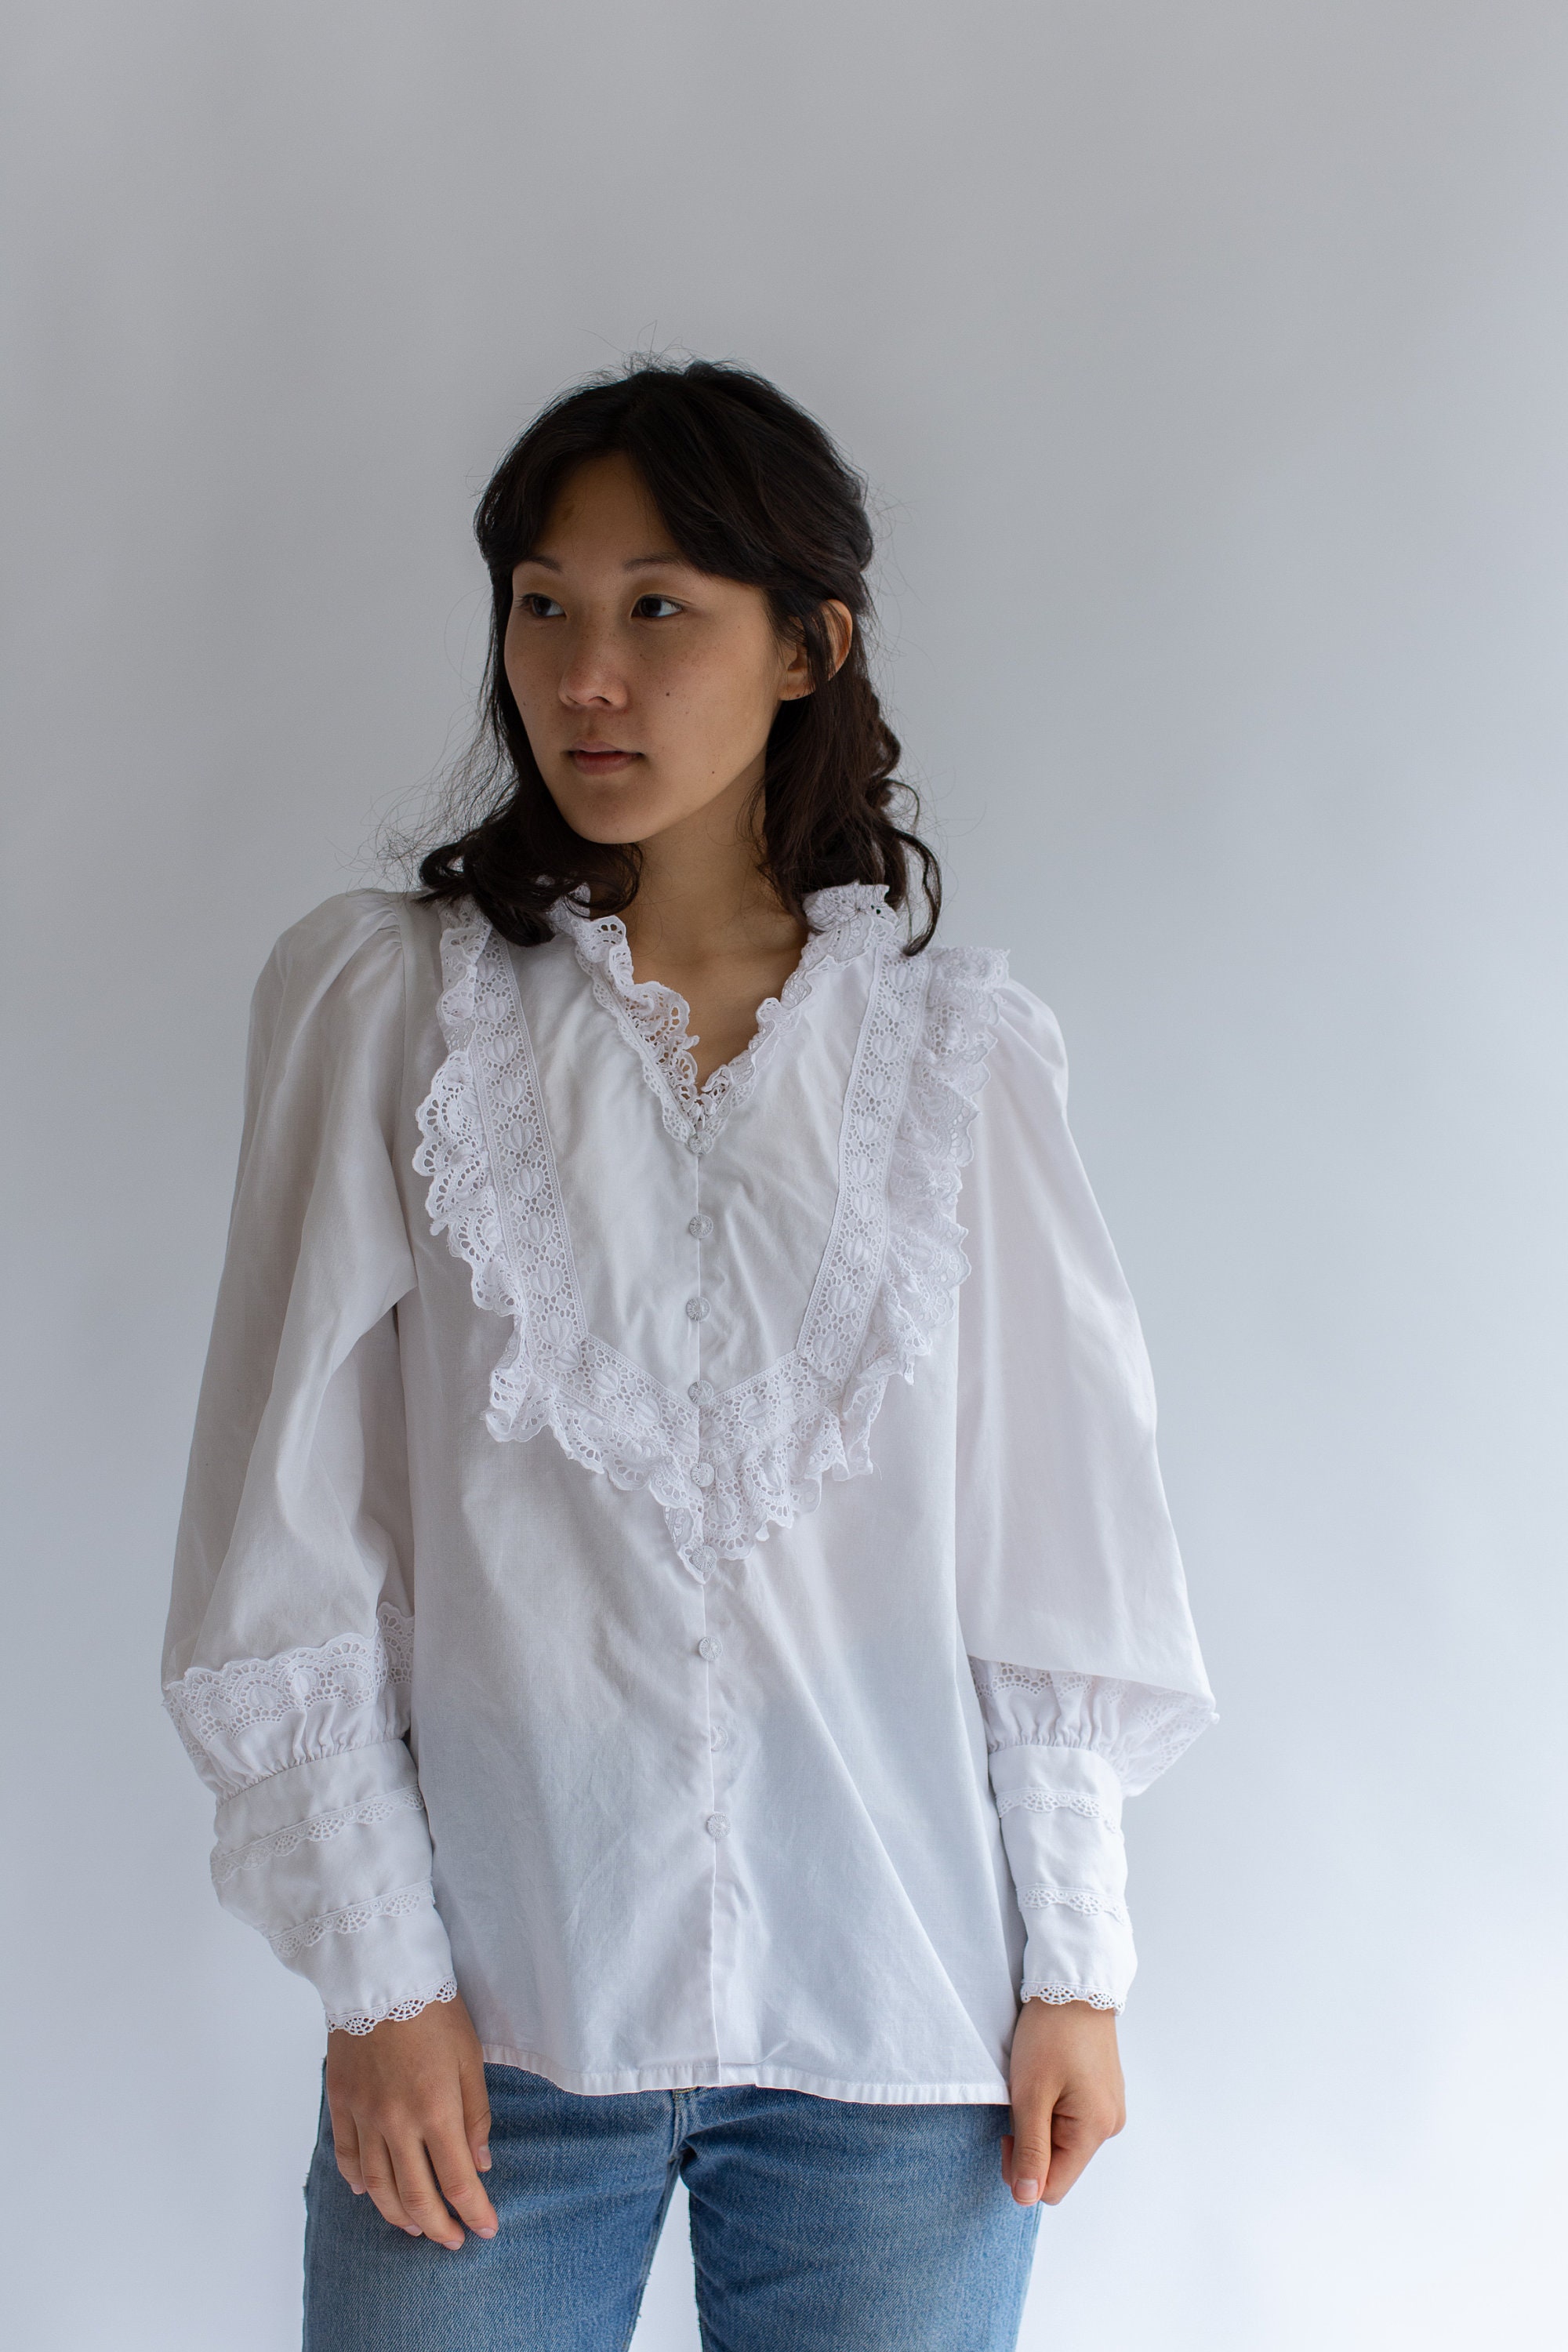 Vintage White Cotton Poet Blouse | Victorian Style Romantic Folk Shirt | S